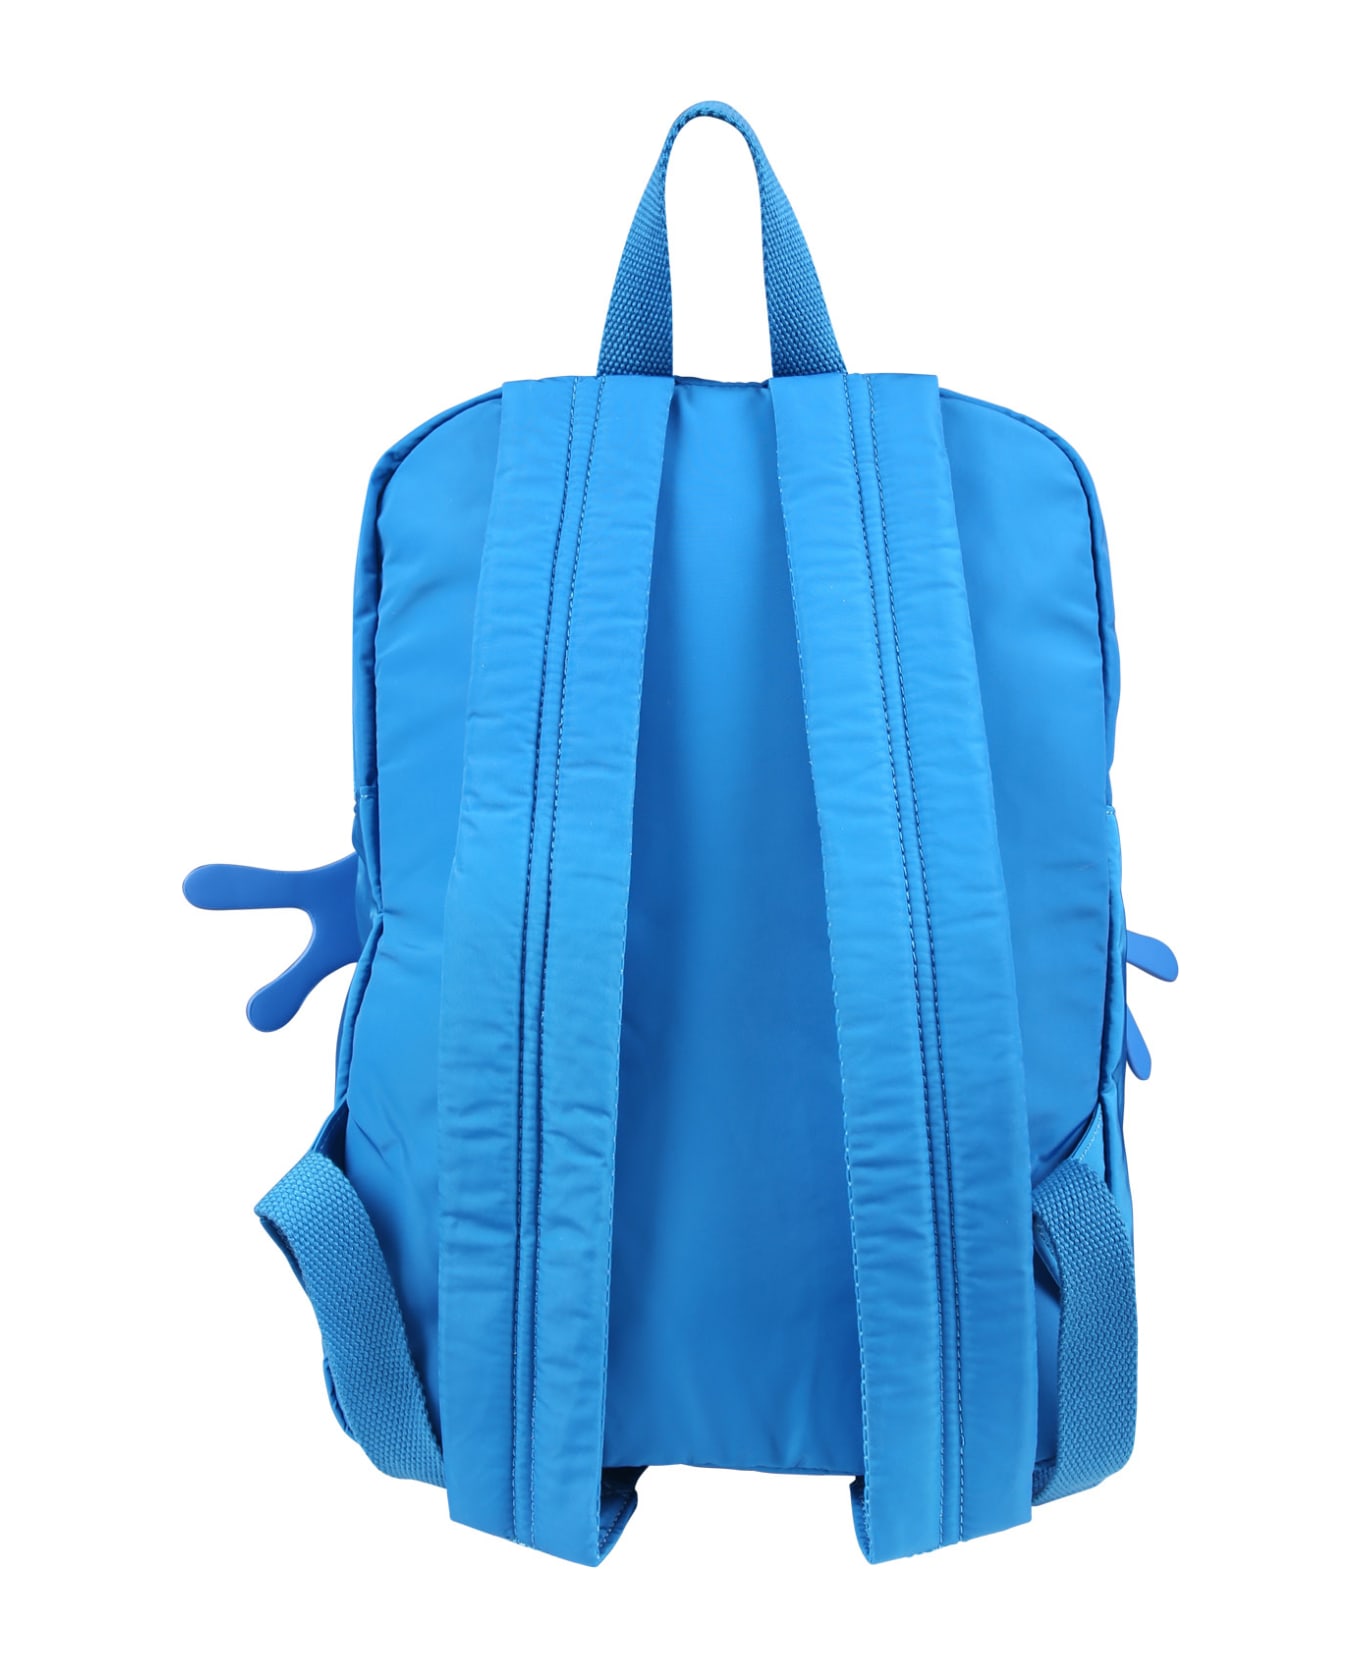 Stella McCartney Kids Blue Backpack For Boy With Monster Print - Light Blue アクセサリー＆ギフト